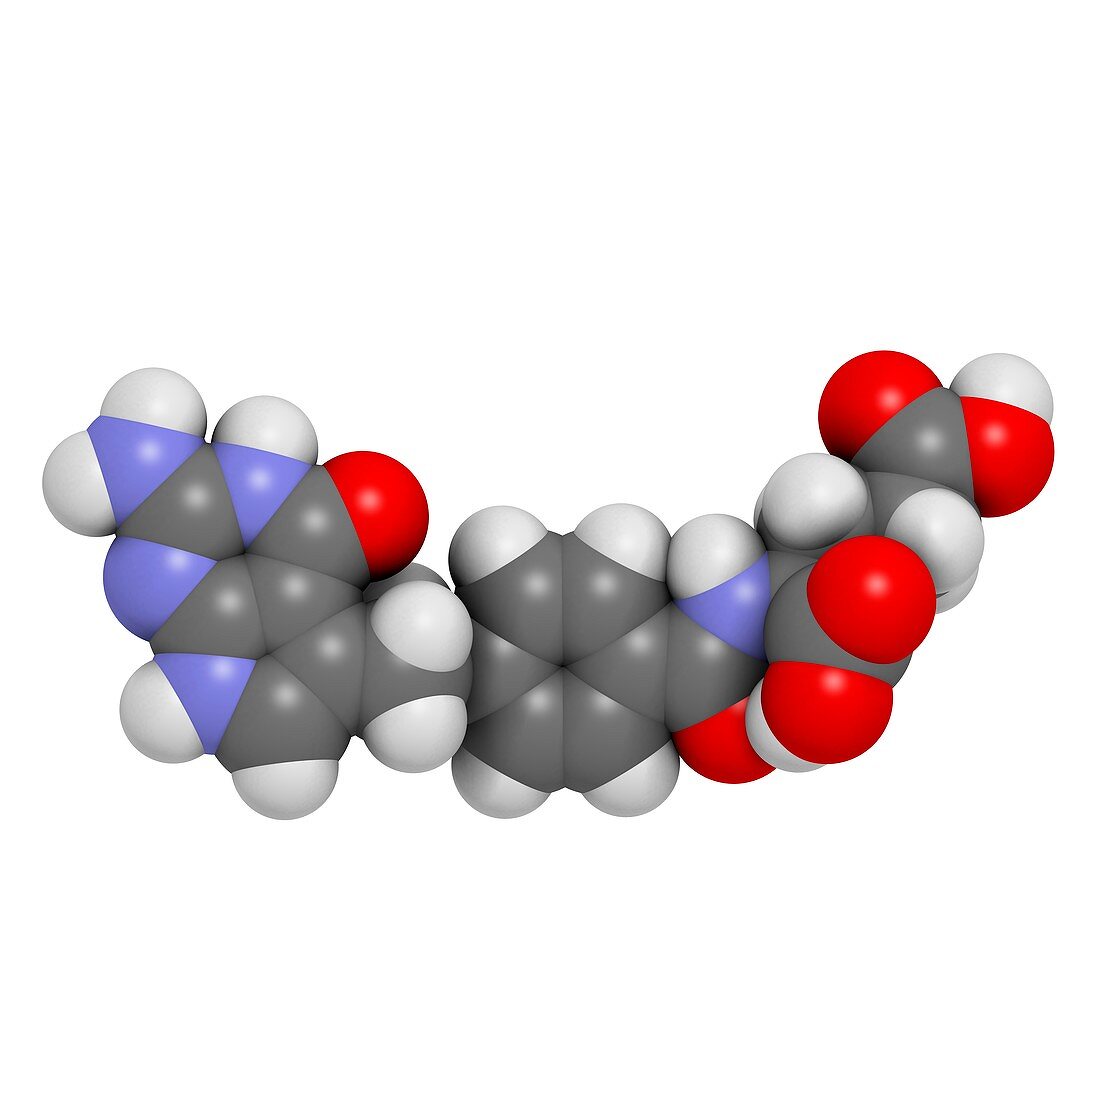 Pemetrexed lung cancer drug molecule